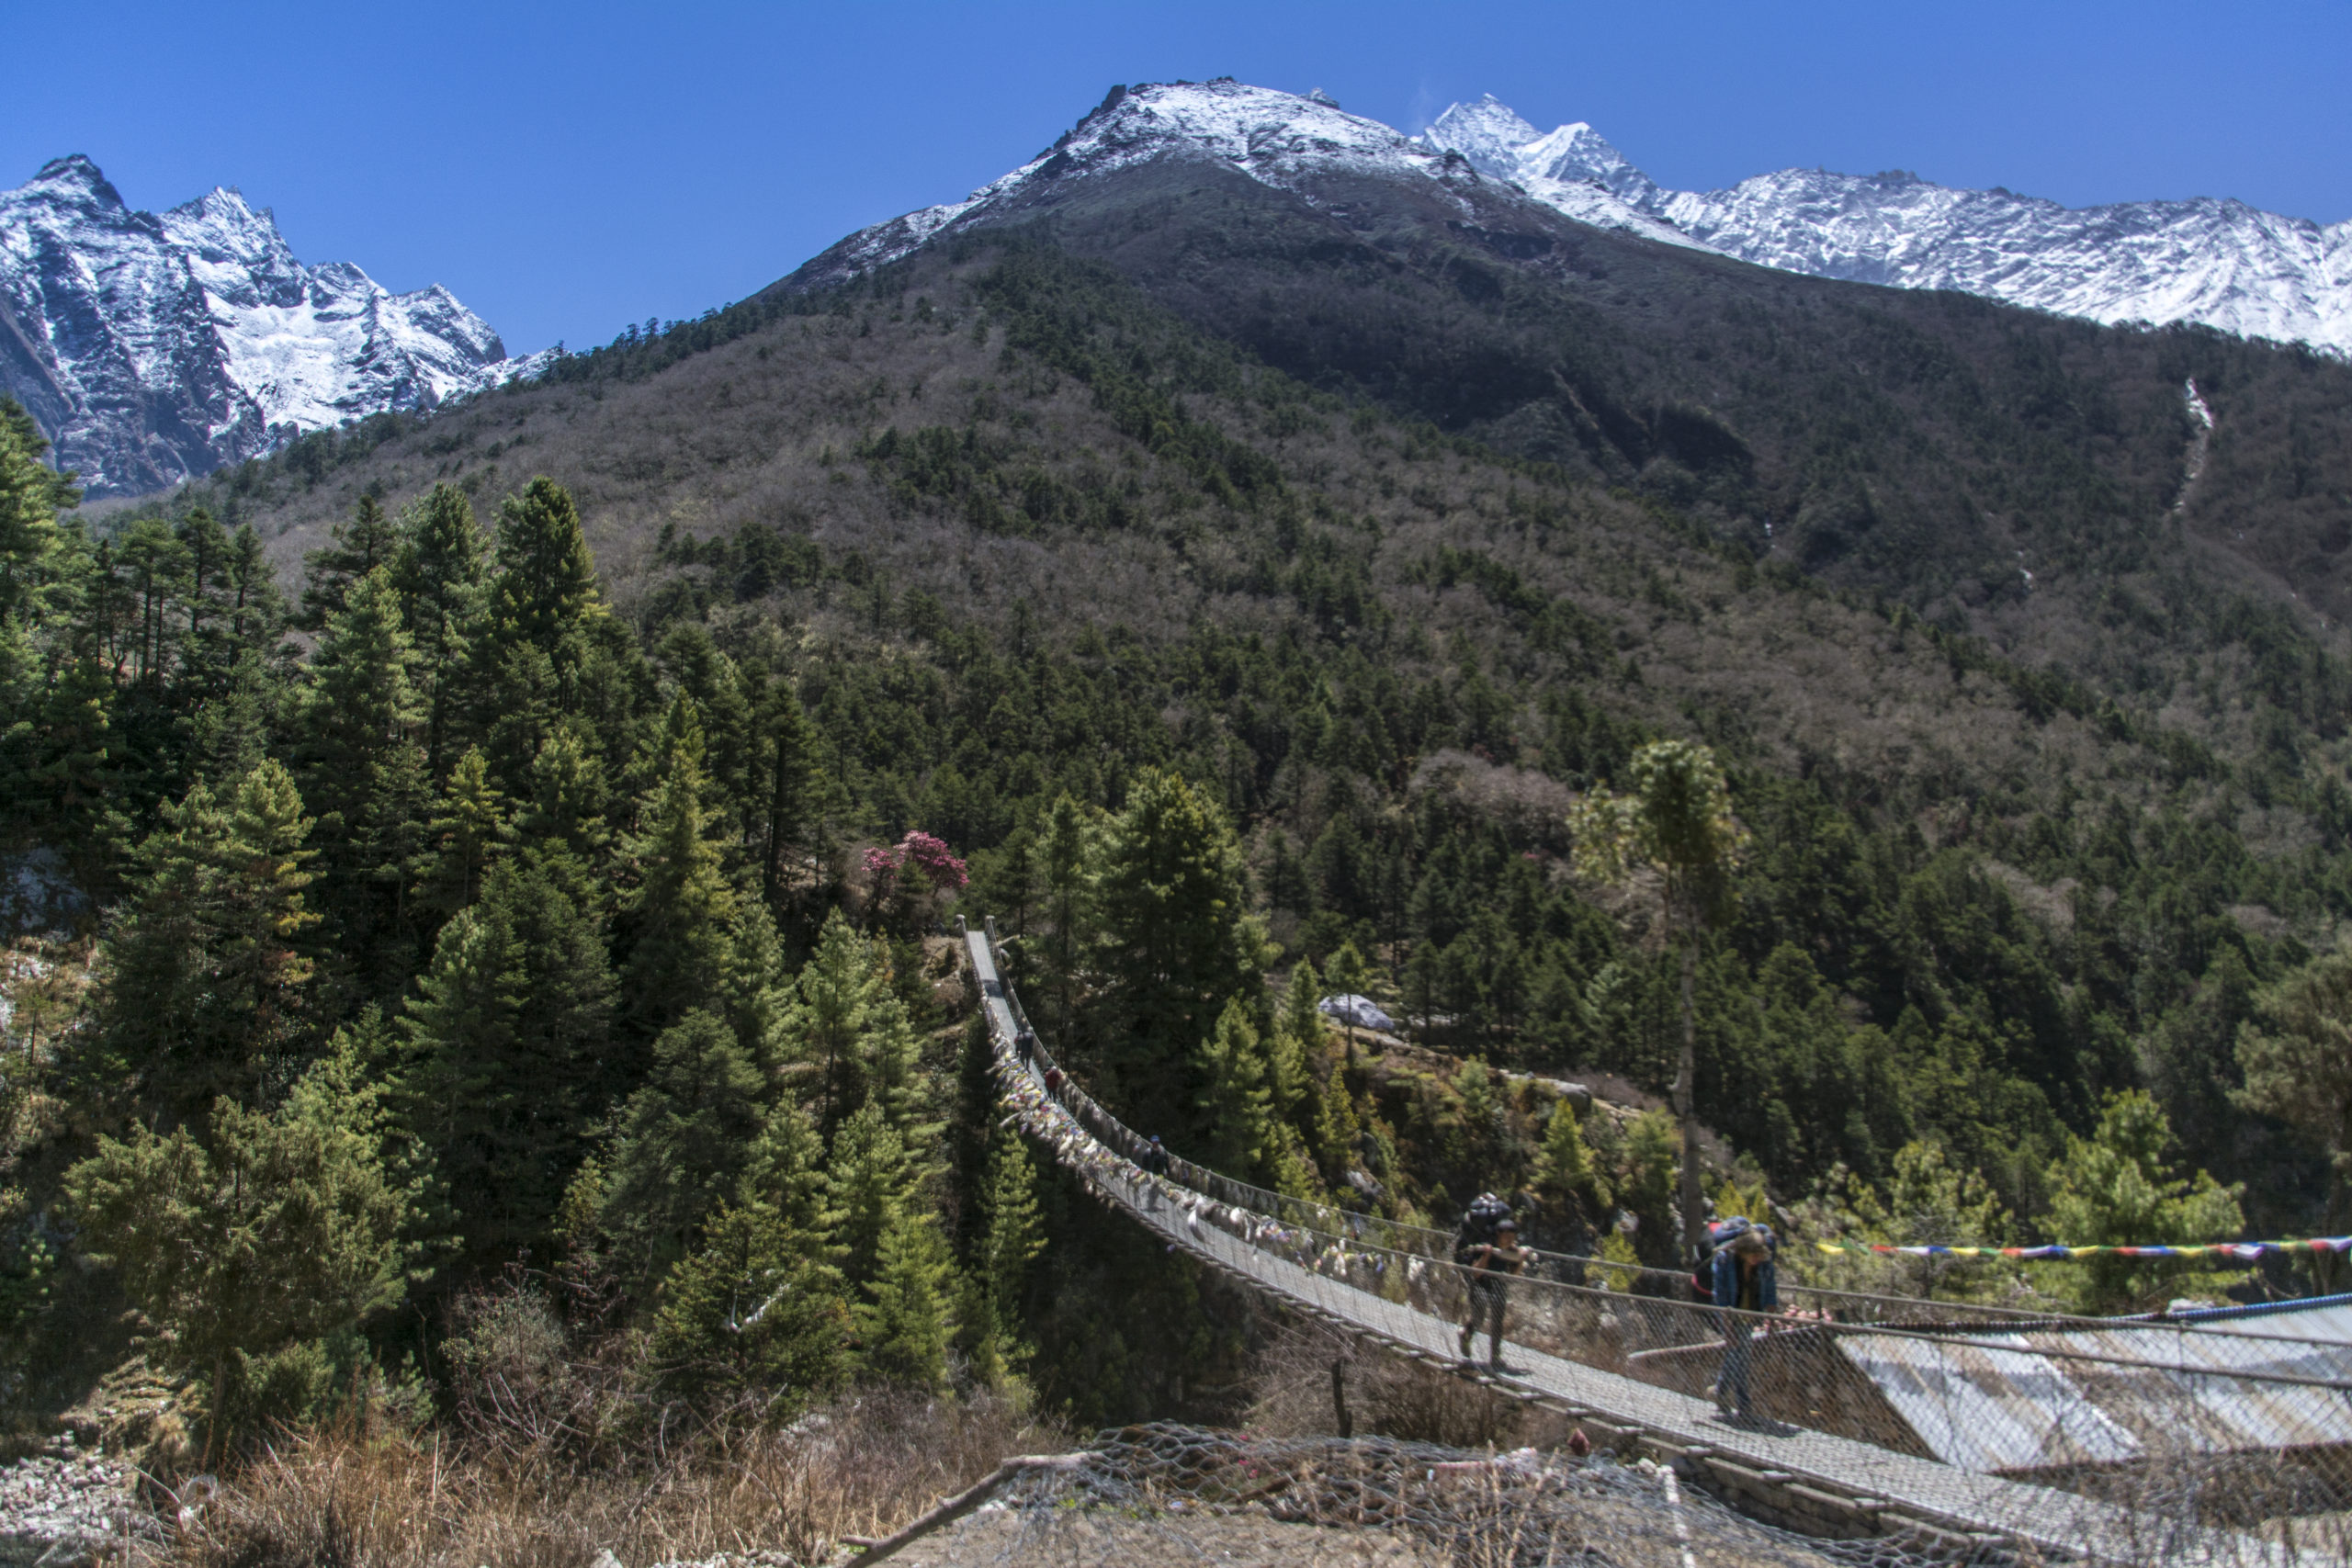 Everest Base Camp Trekking Package From Kathmandu 2020 ~ KTM Guide